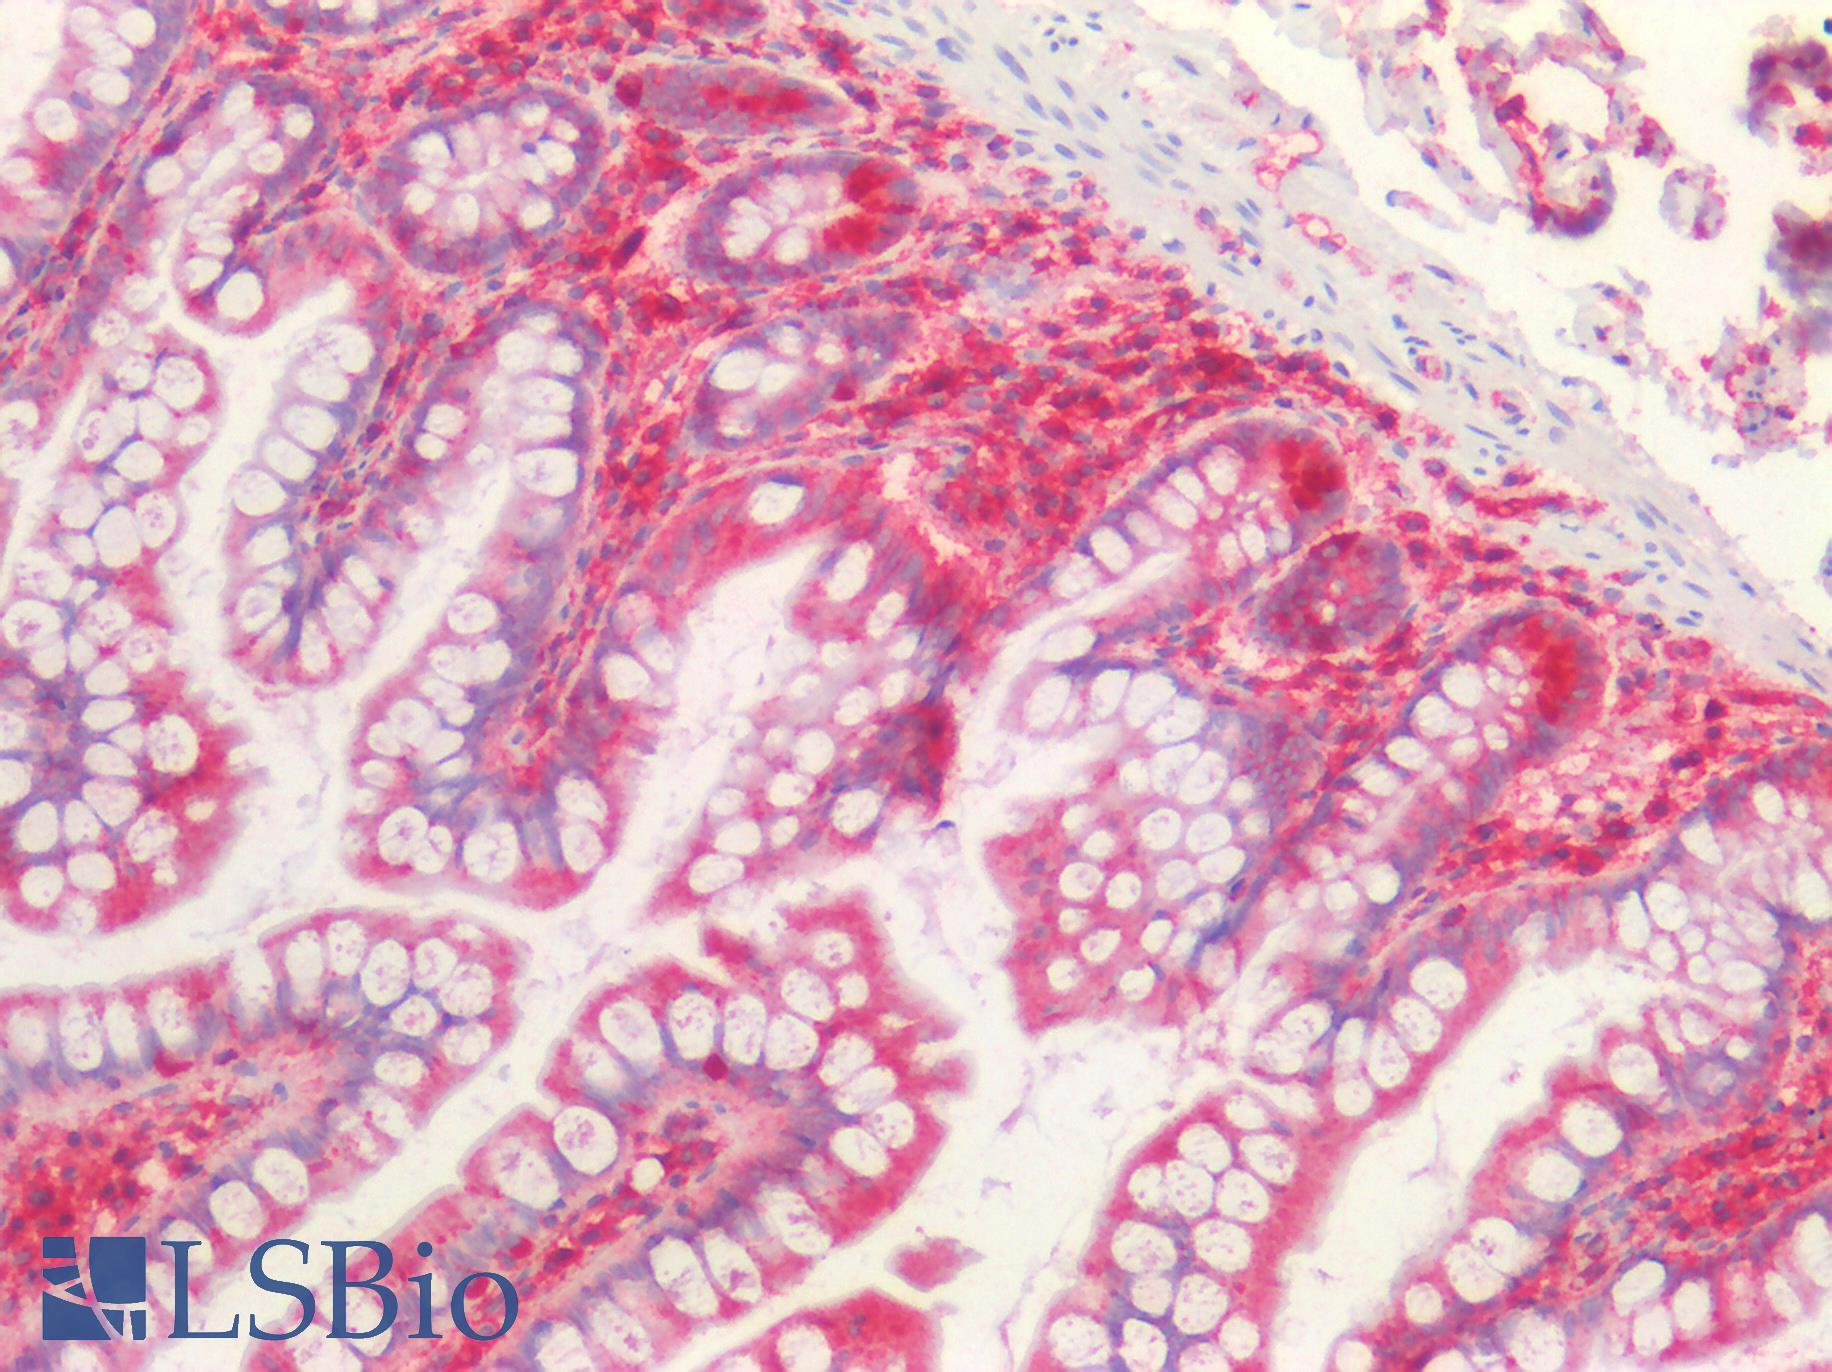 B2M / Beta 2 Microglobulin Antibody - Human Small Intestine: Formalin-Fixed, Paraffin-Embedded (FFPE)